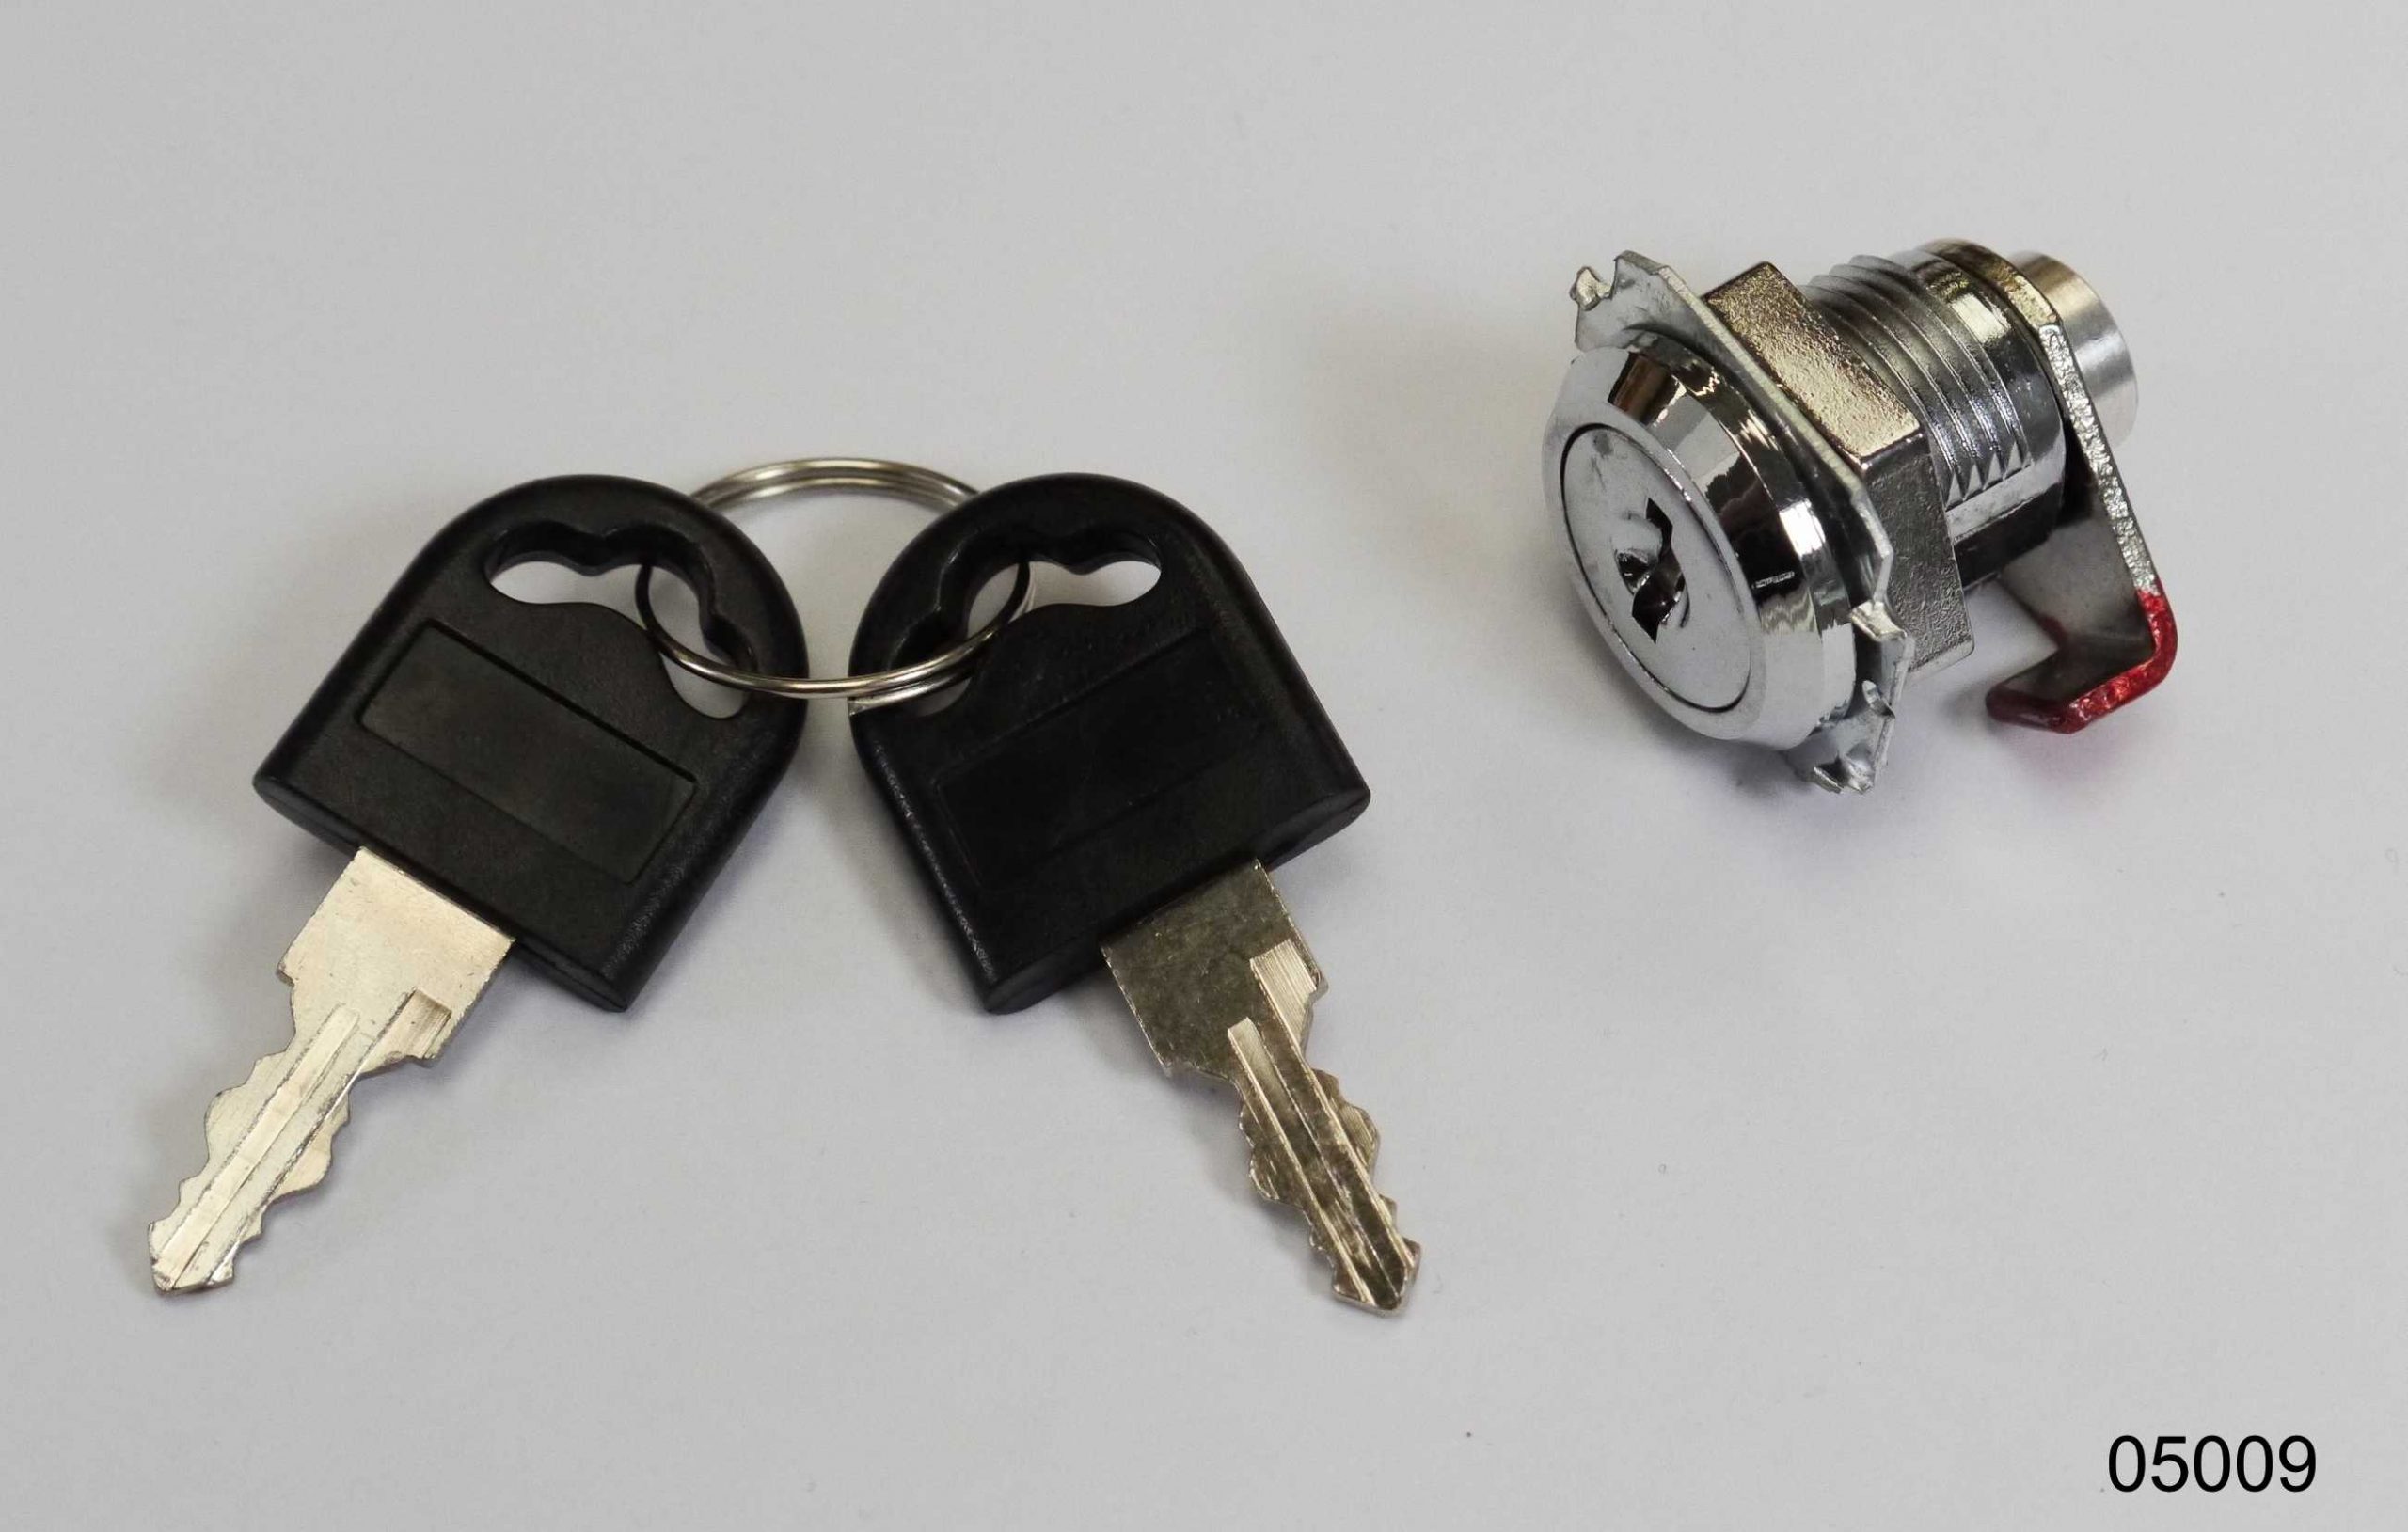 C42 New style door lock replacement barrel and keys (1 pair) – GTLAC